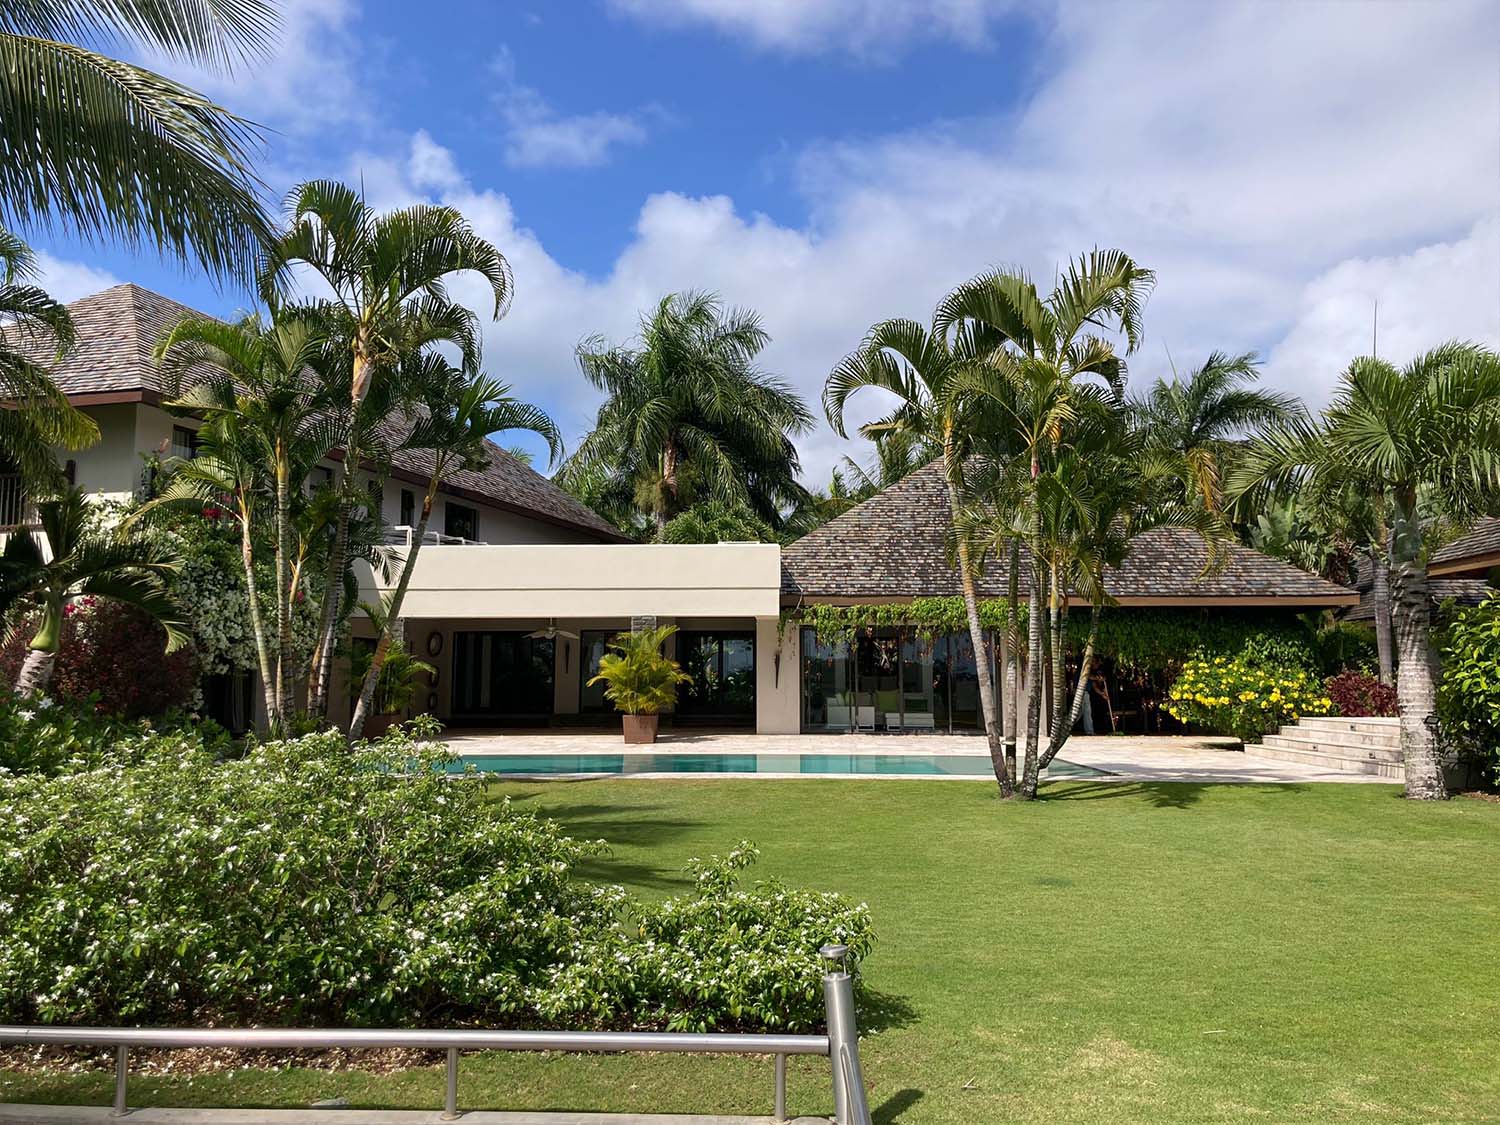 Rental of the 3-bedroom villa Kennedy at Anahita Golf Club, Mauritius